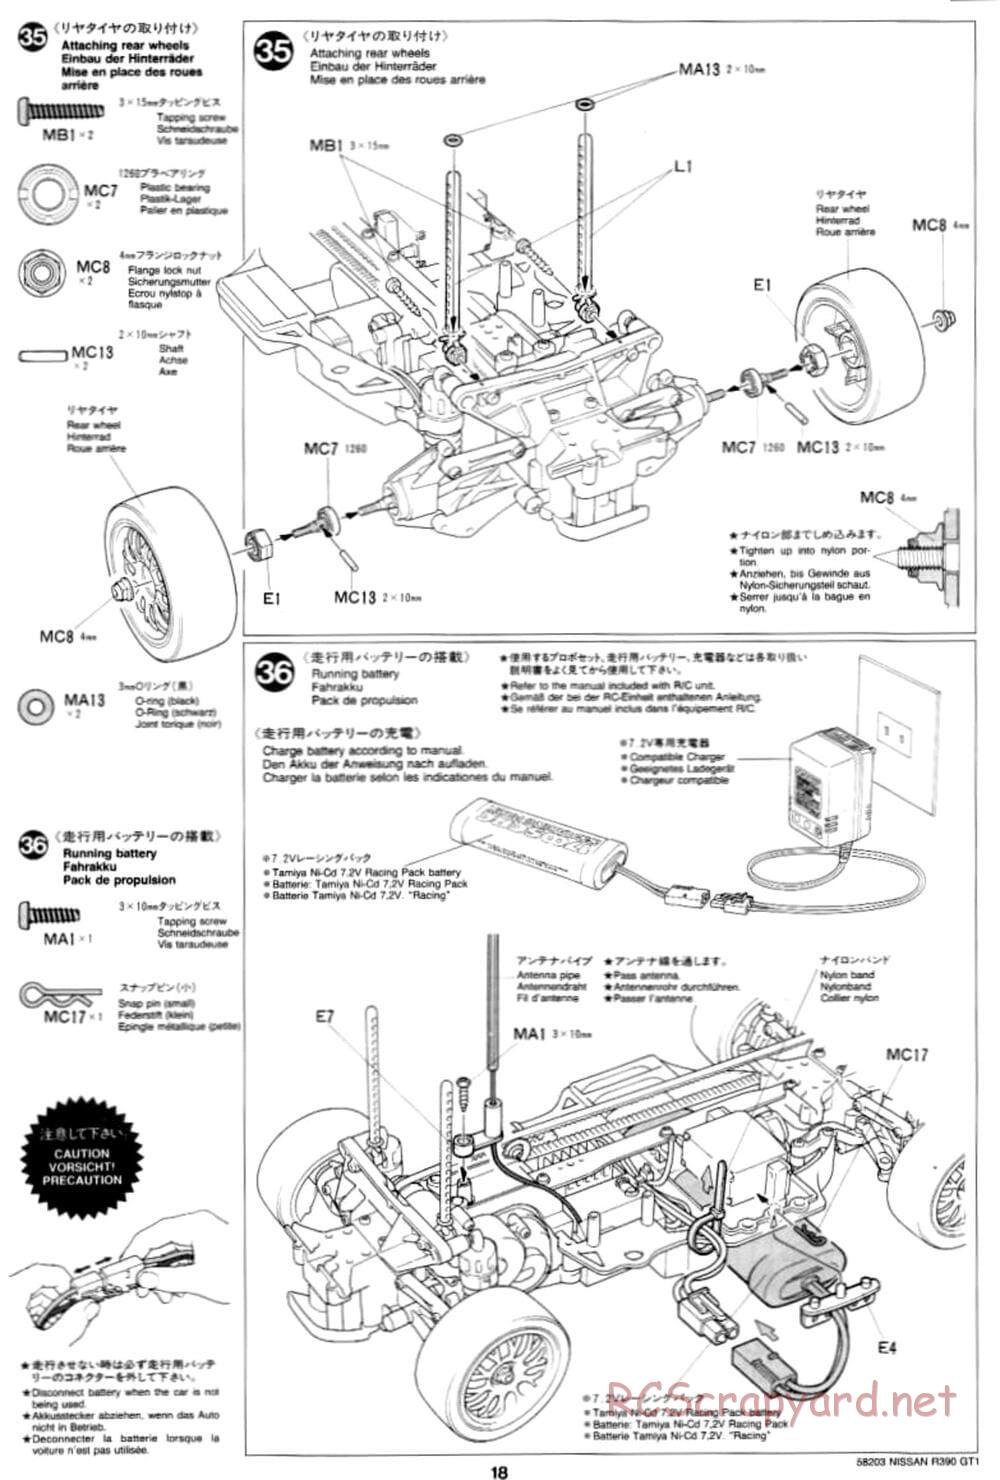 Tamiya - Nissan R390 GT1 - TA-03R Chassis - Manual - Page 18